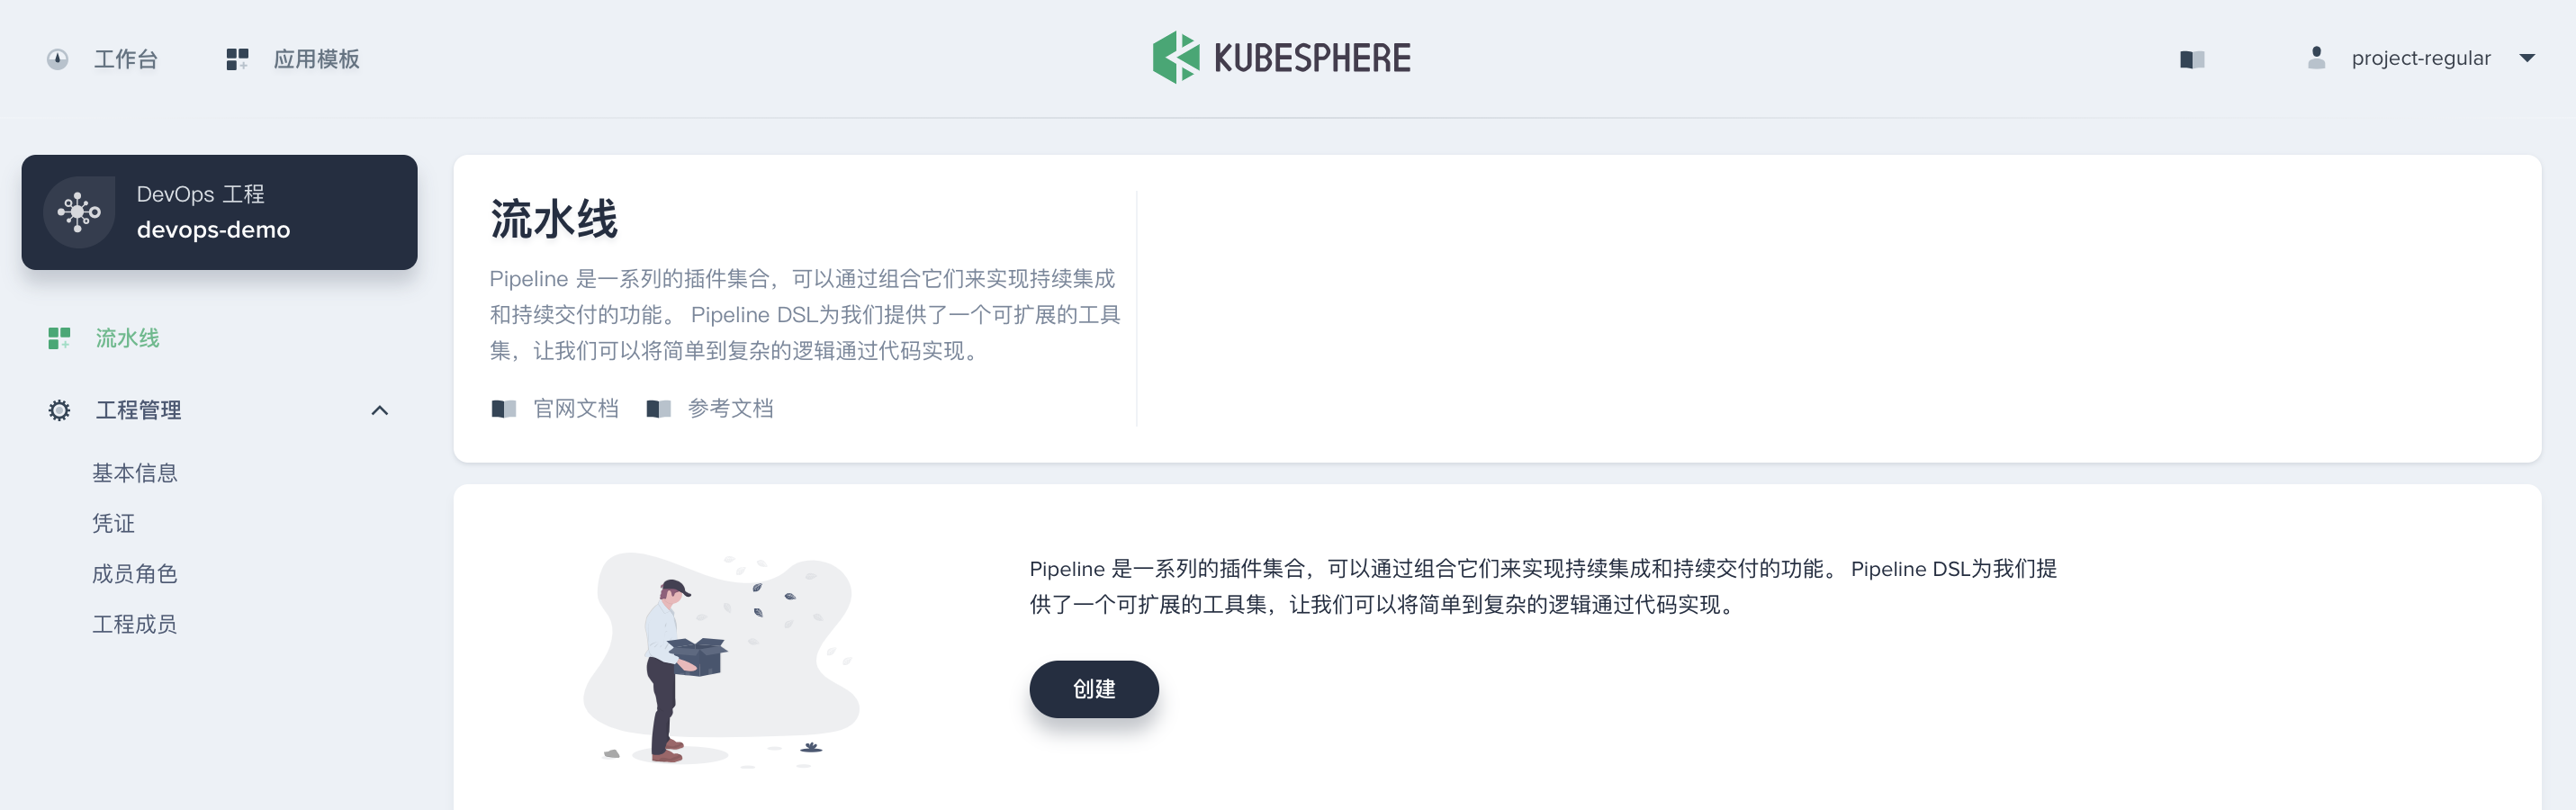 基于KubeSphere CI/CD如何将Spring Boot项目发布至Kubernetes